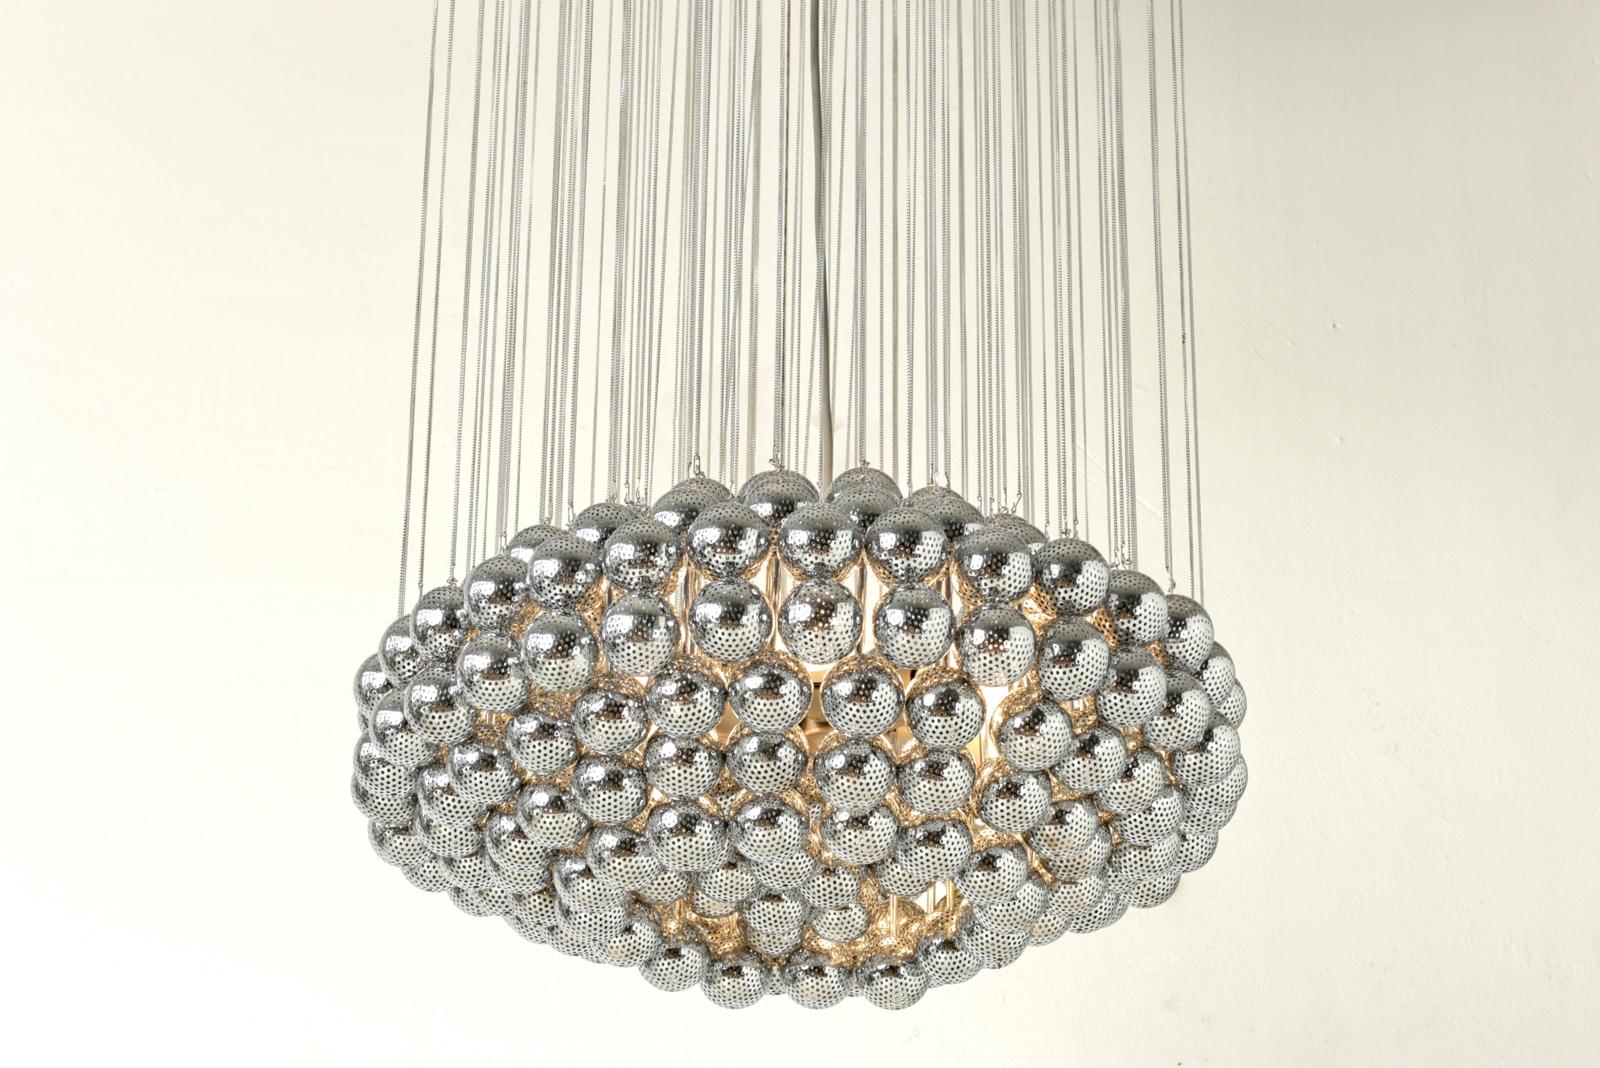 Swiss Pendant Lamp attr. to Verner Panton, Switzerland - 1969 For Sale